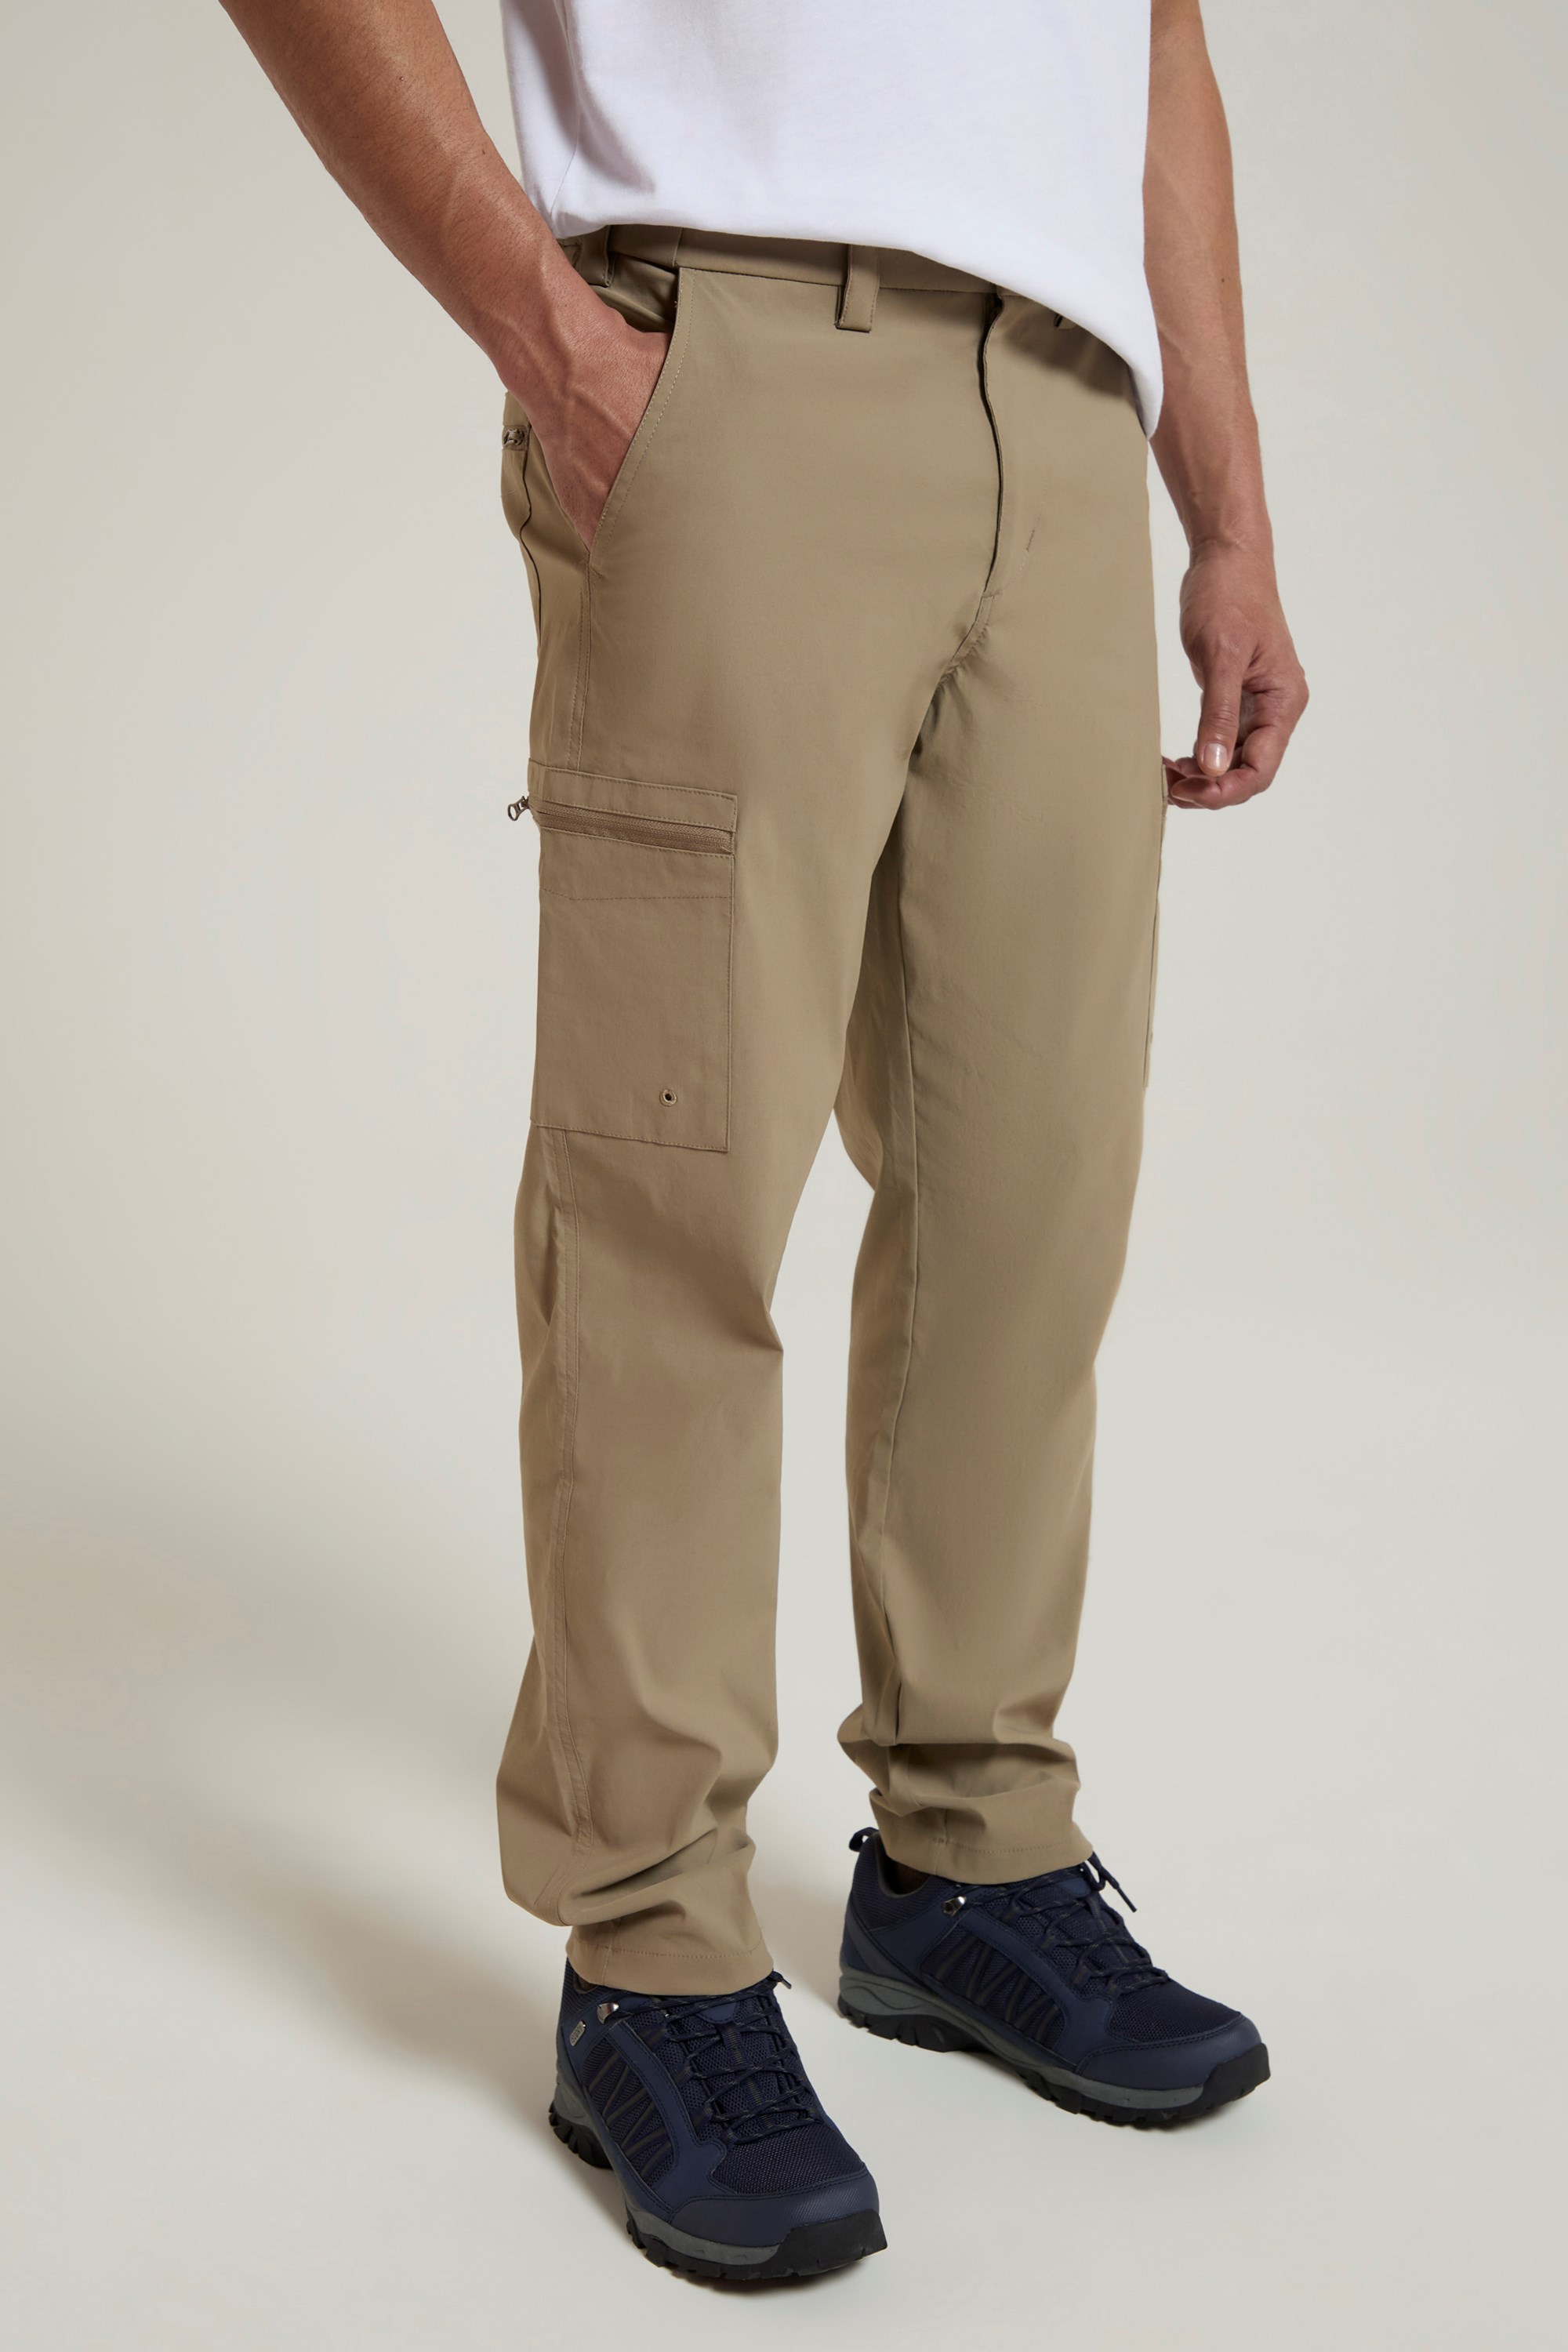 Trek Stretch Mens Pants - Regular length - Dark Beige